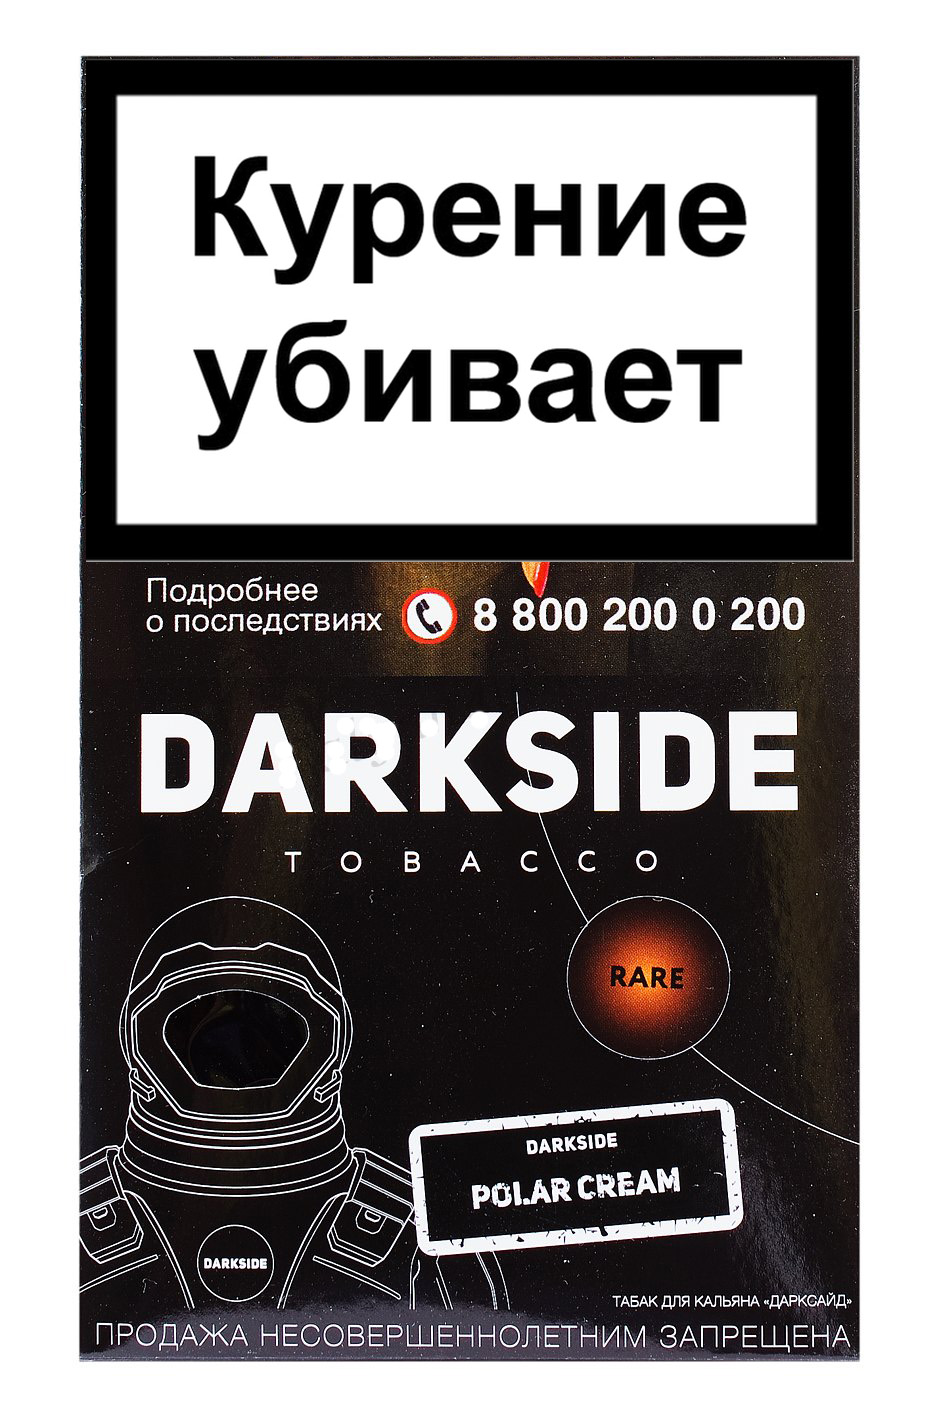 Табак для кальяна Dark Side Core. Dark Side Core табак вкусы. Dark Side табак rare вкусы. Табак для кальяна Darkside Core - Dark passion 100 гр..